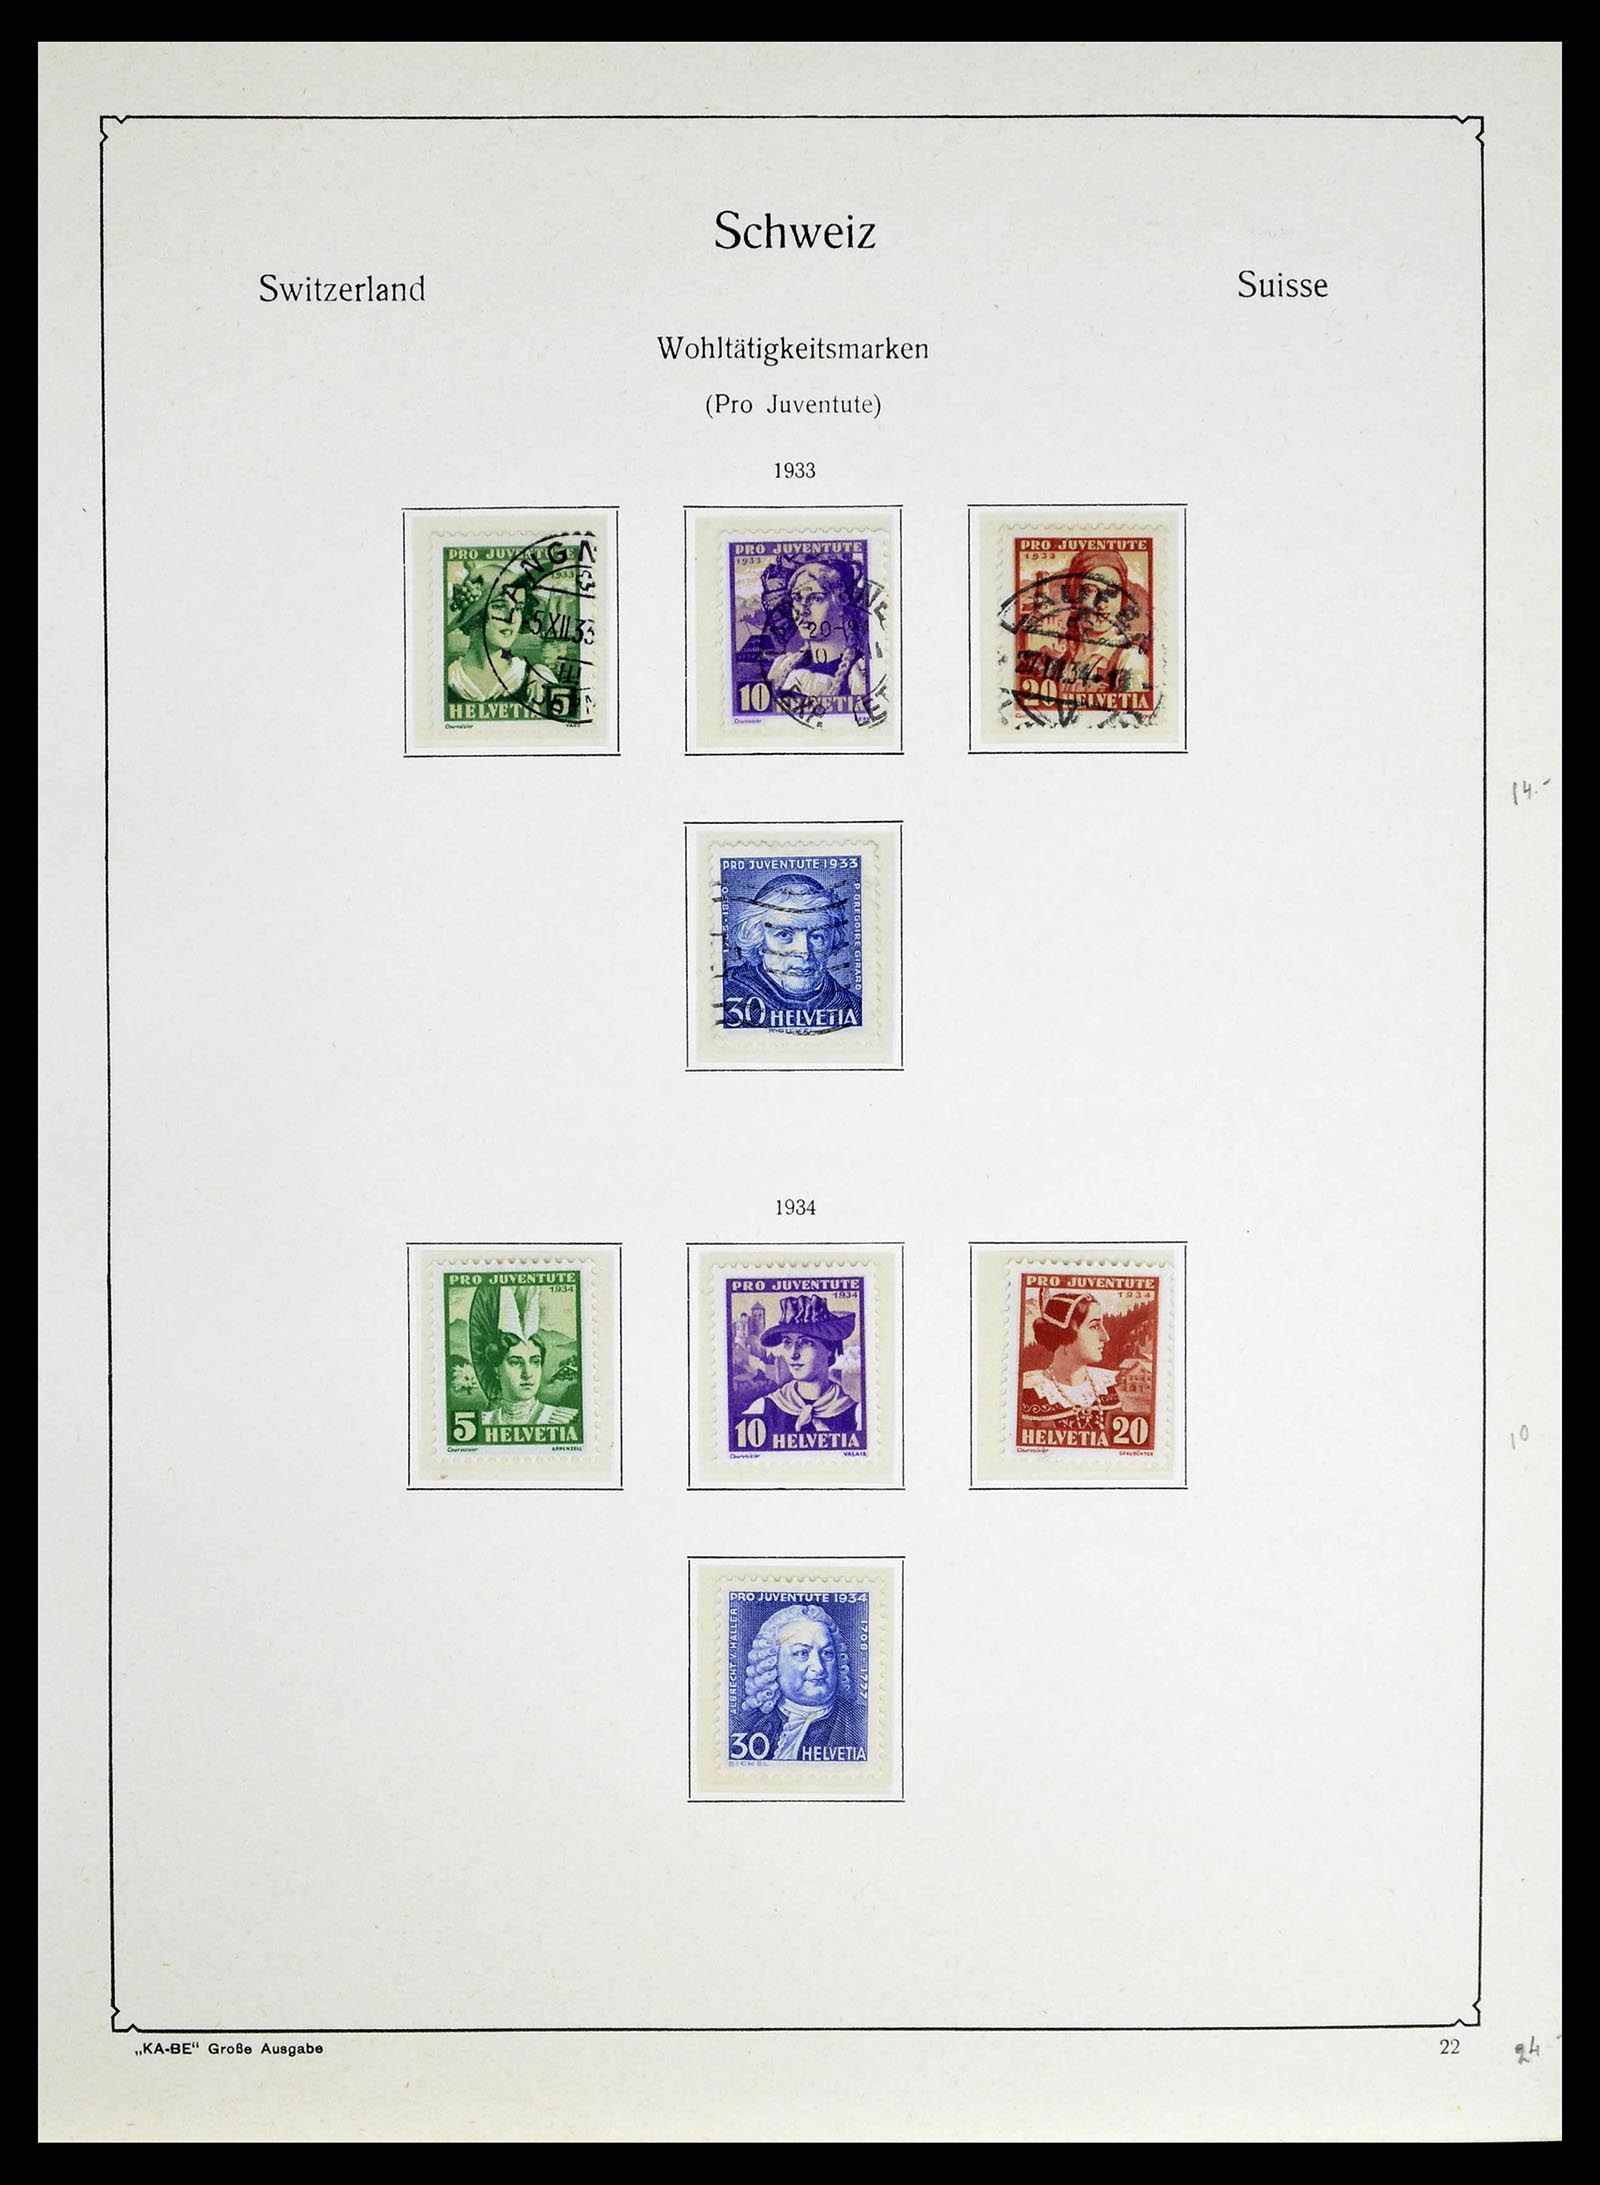 38706 0022 - Stamp collection 38706 Switzerland 1854-1985.